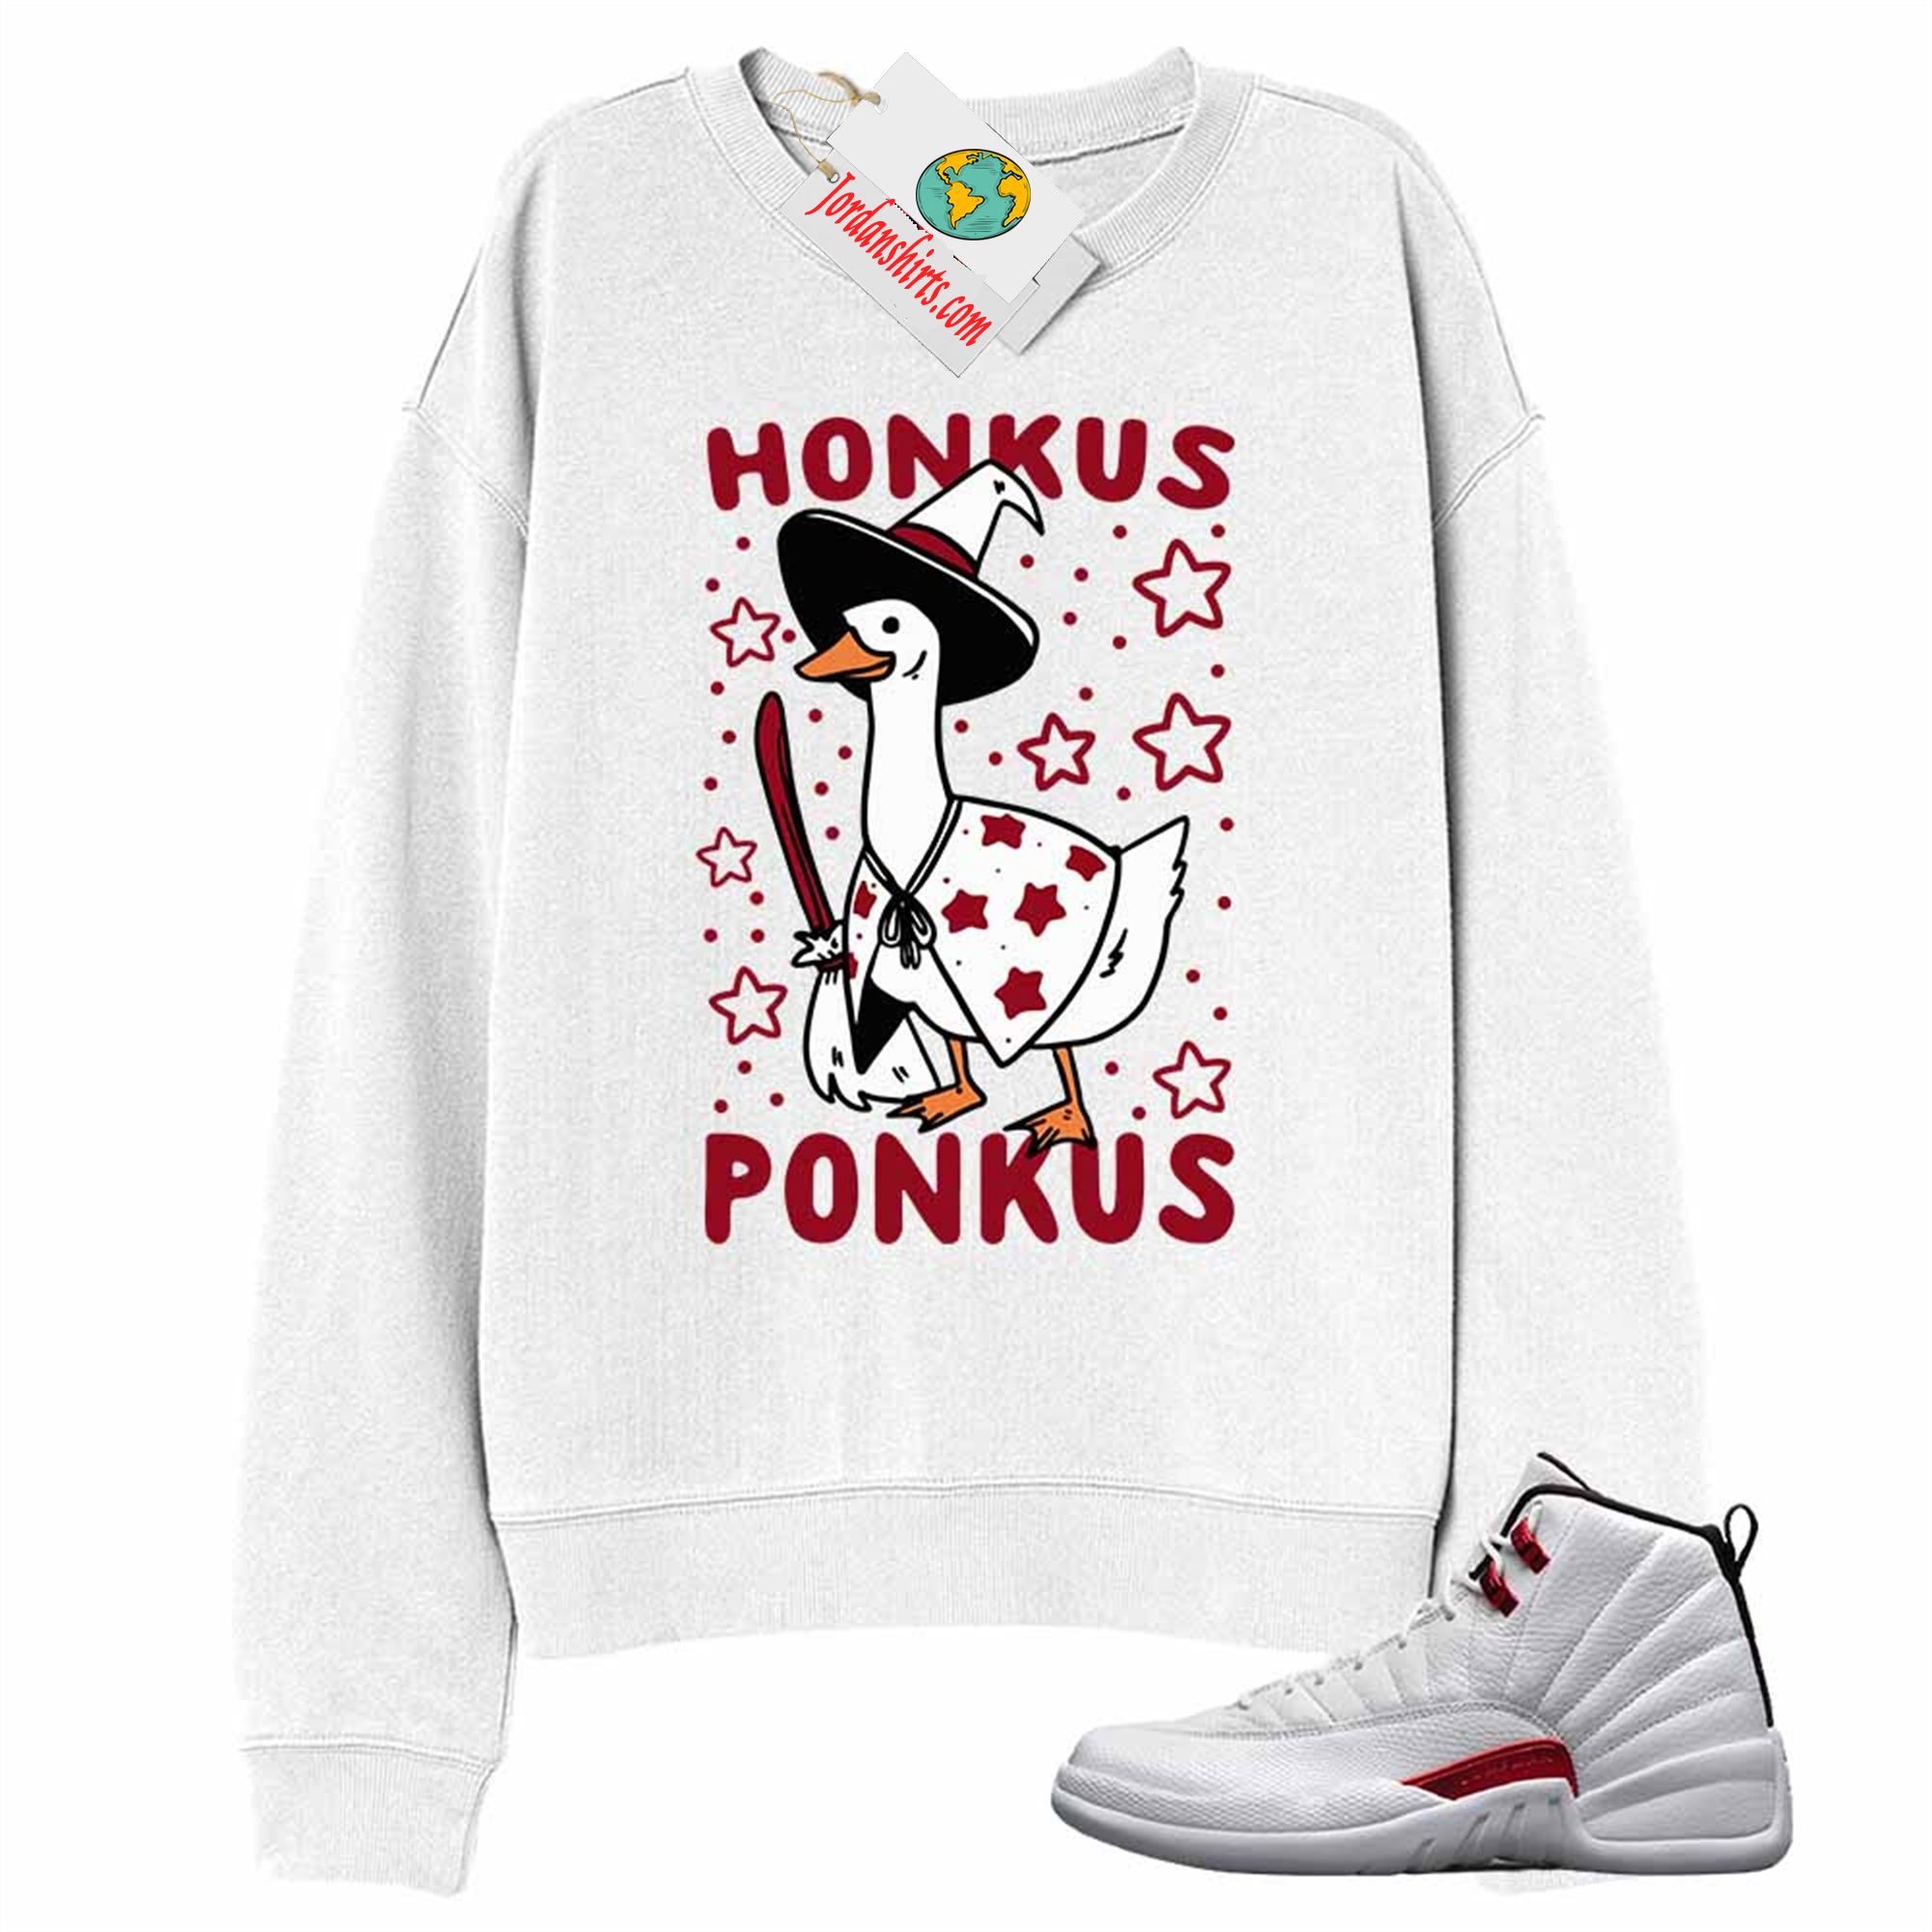 Jordan 12 Sweatshirt, Witches Duck Honkus Ponkus White Sweatshirt Air Jordan 12 Twist 12s Full Size Up To 5xl